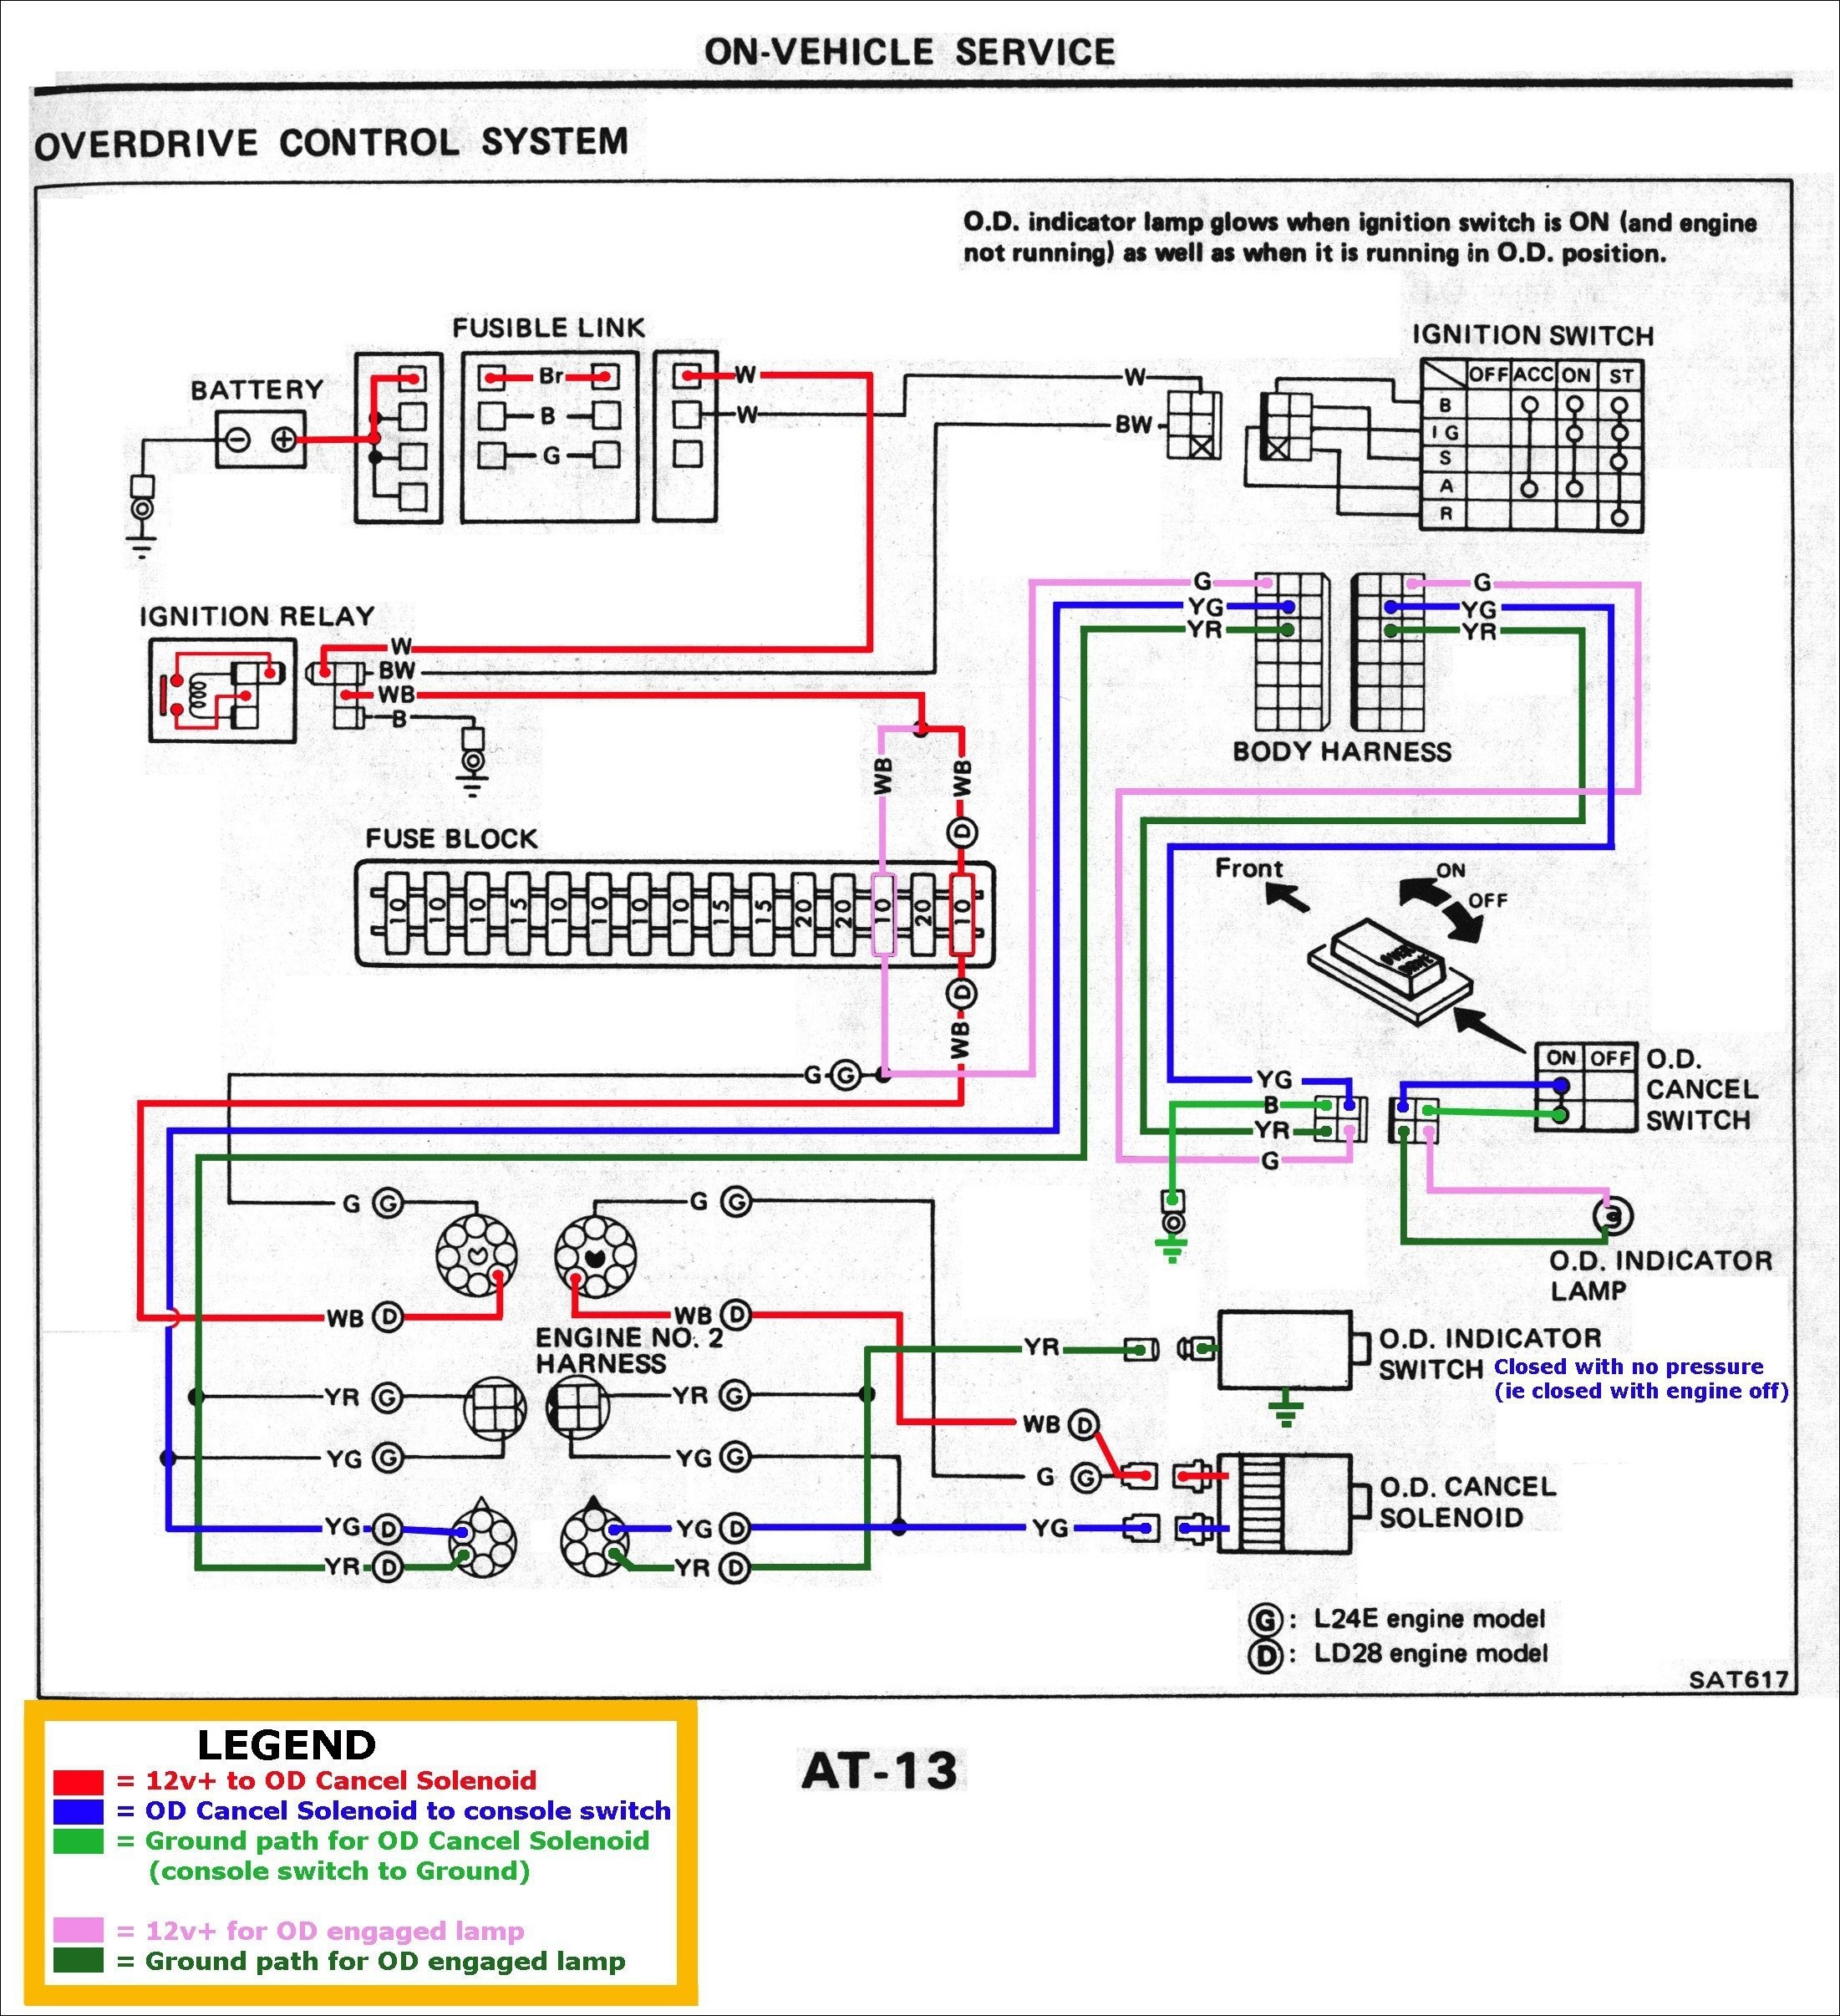 2001 Chevy Impala 3 8 Engine Diagram 2001 Nissan Maxima Radio Wiring Diagram Inspirational Nissan Altima Of 2001 Chevy Impala 3 8 Engine Diagram